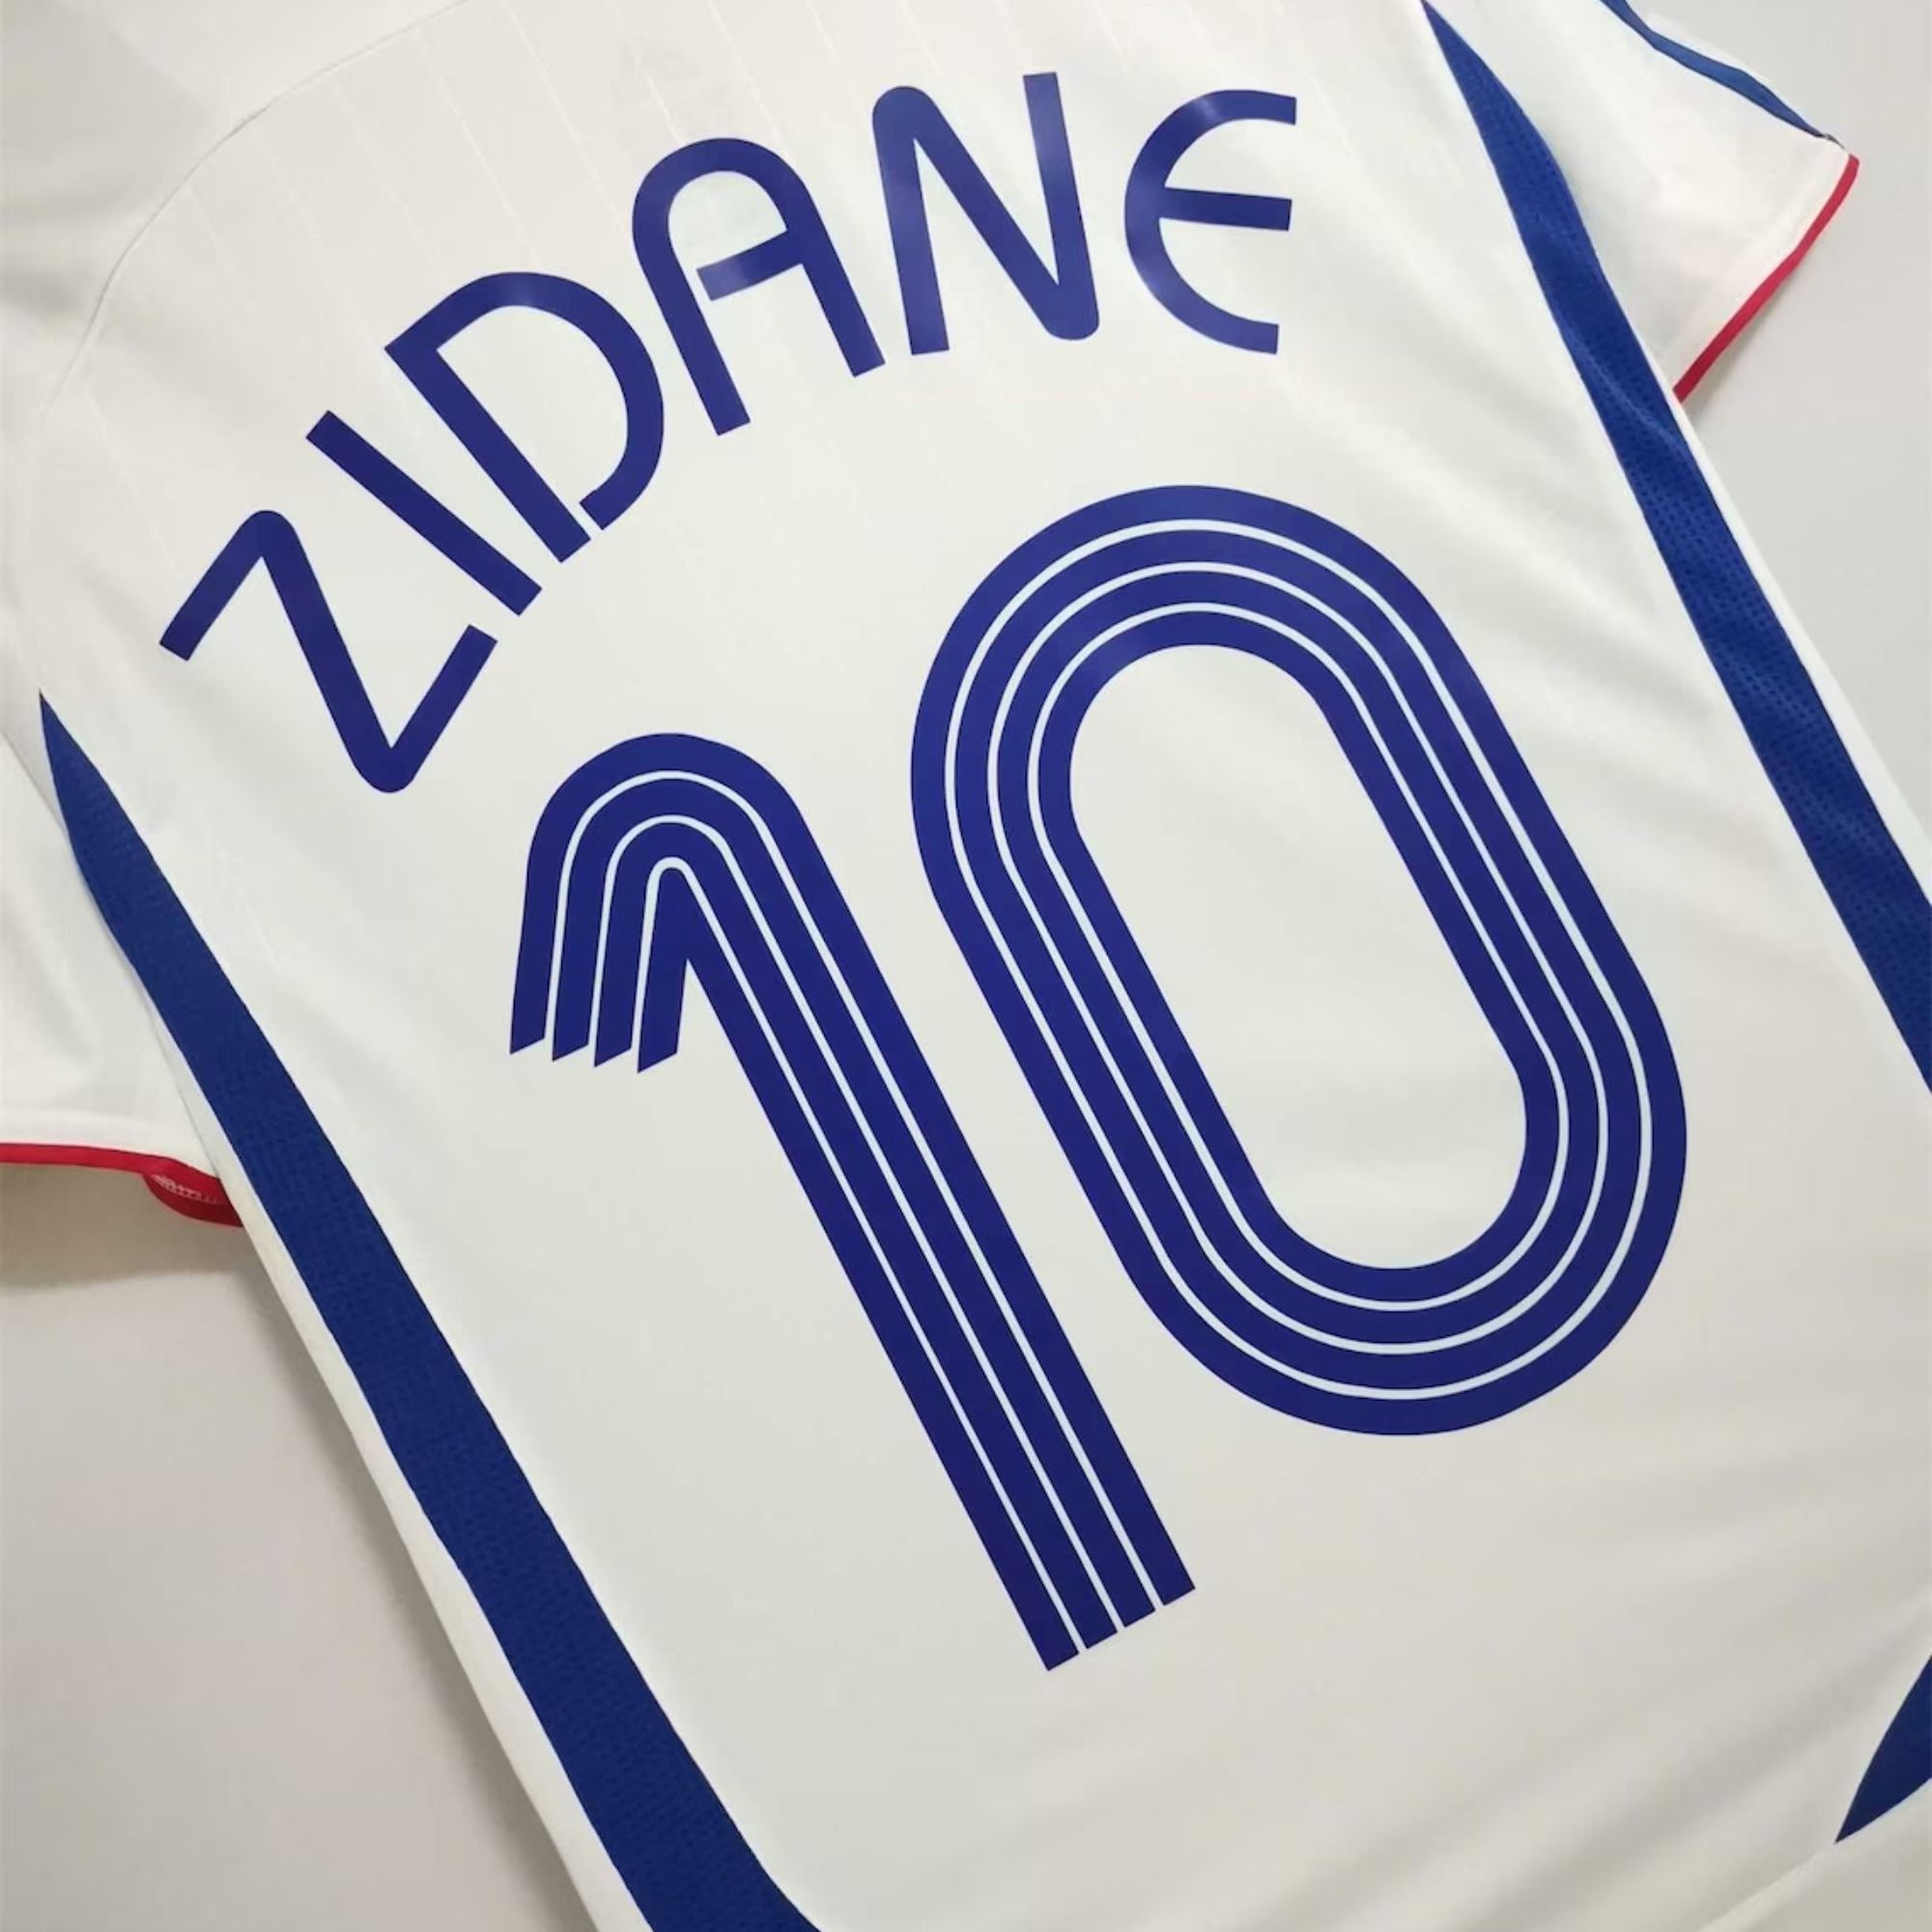 France 2006 Zidane Jersey - ITASPORT